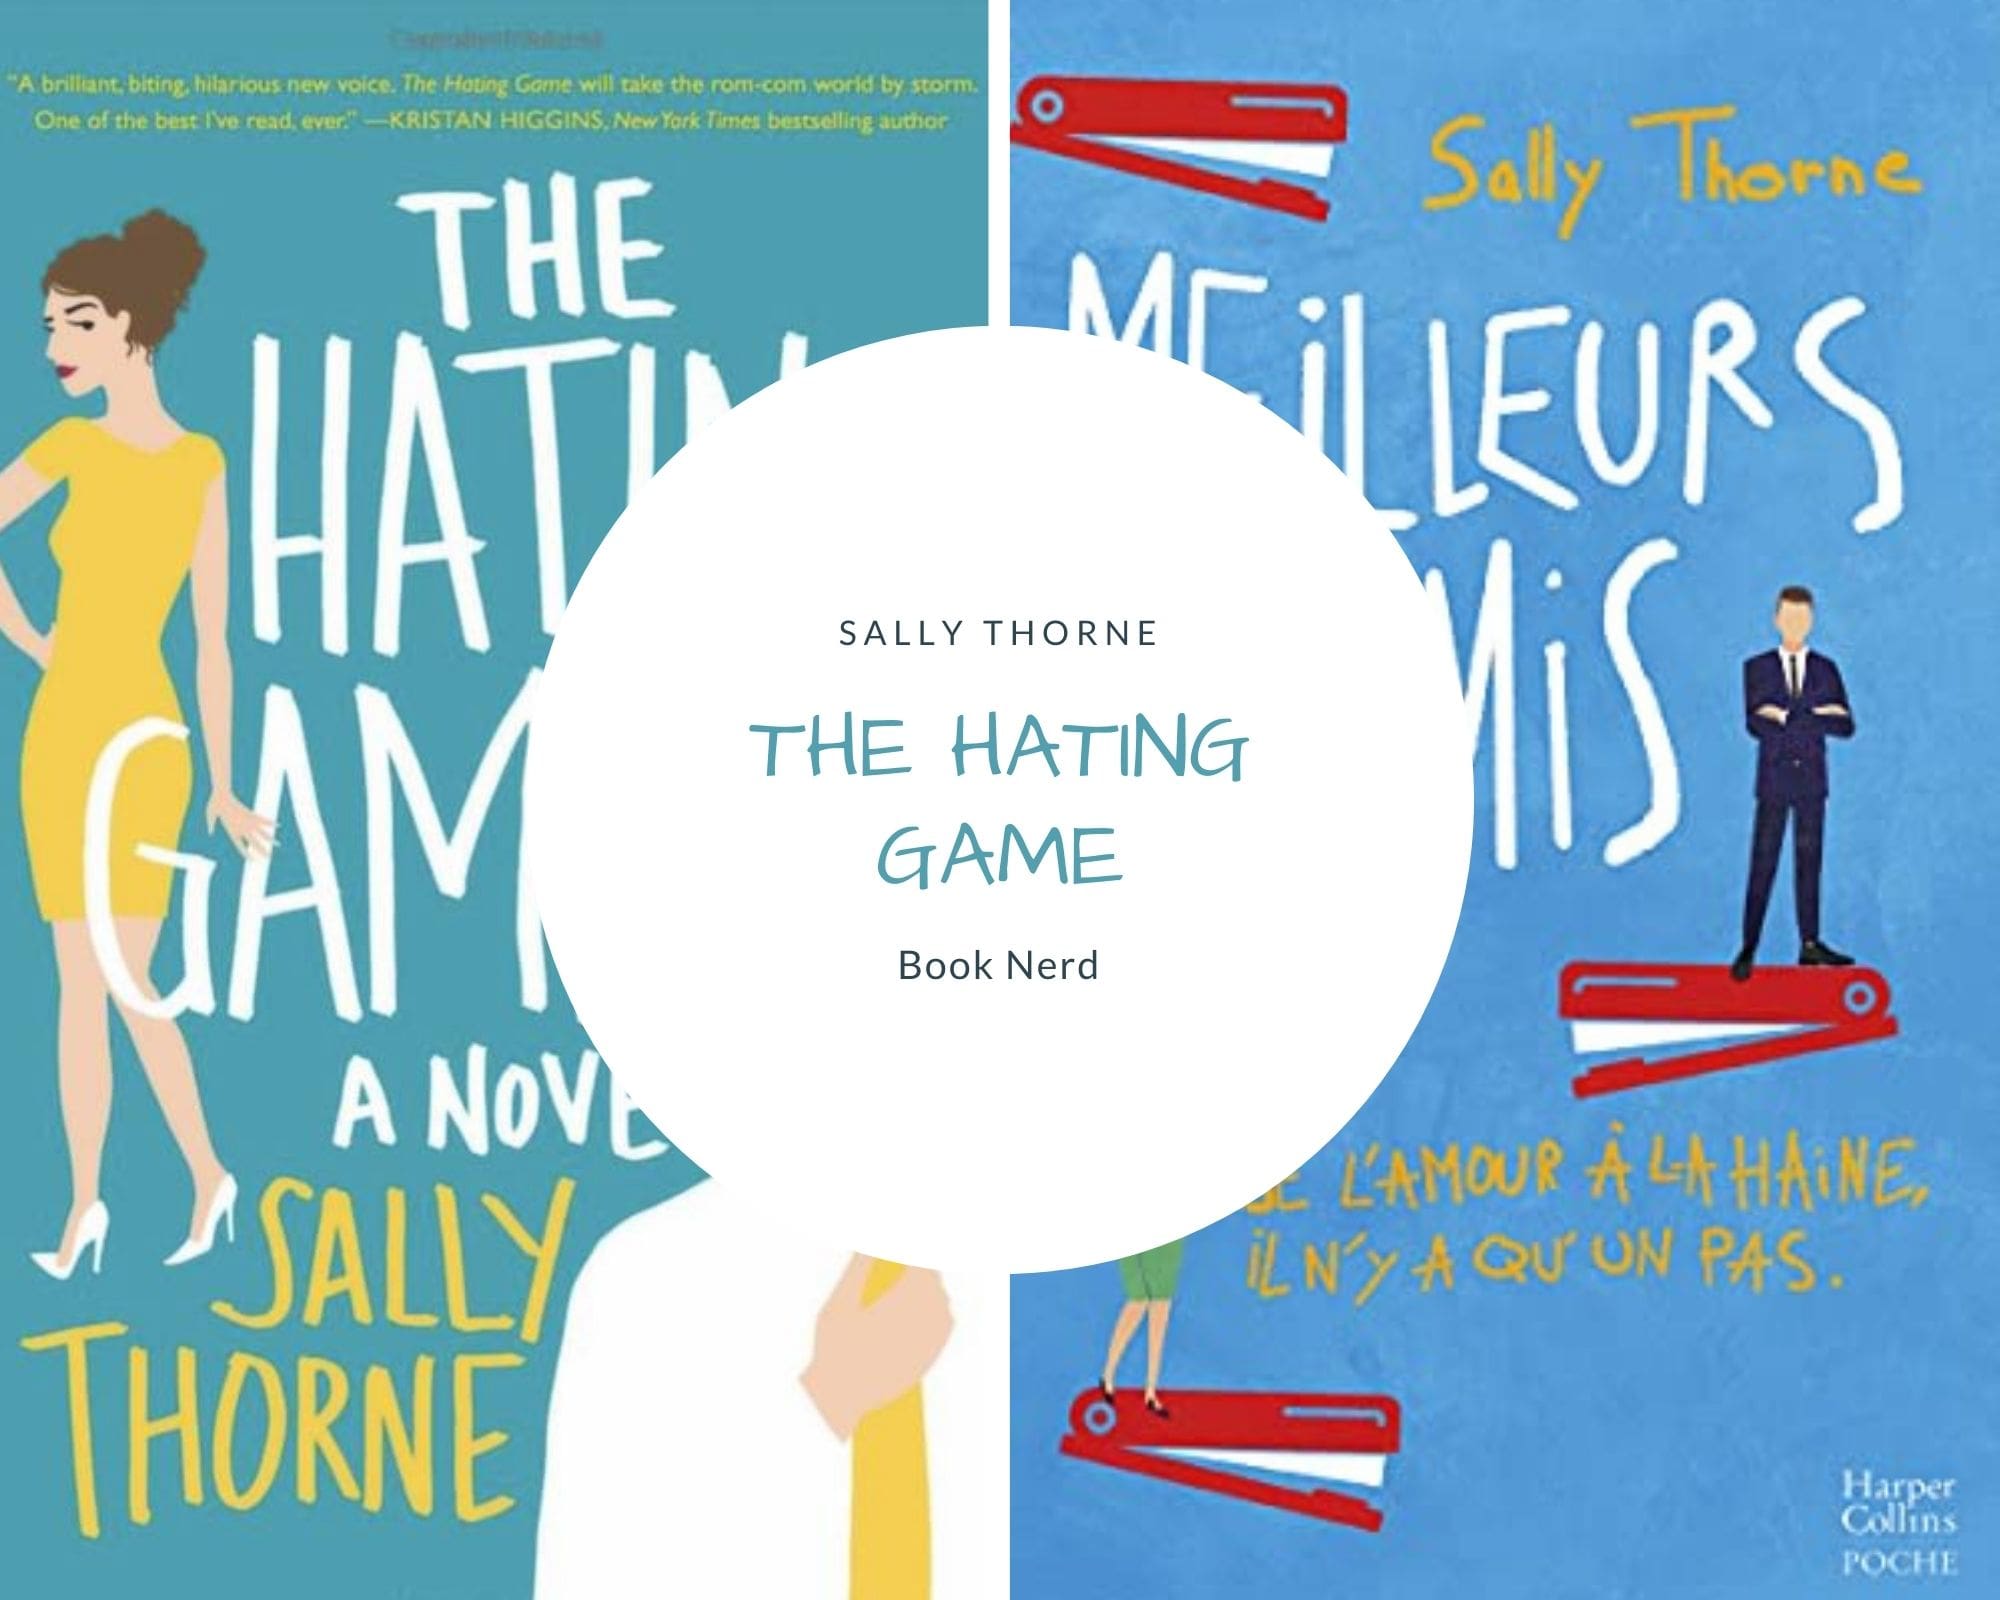 The Hating Game - Meilleurs Ennemis - Sally Thorne - Résumé & Avis - Romance contemporaine